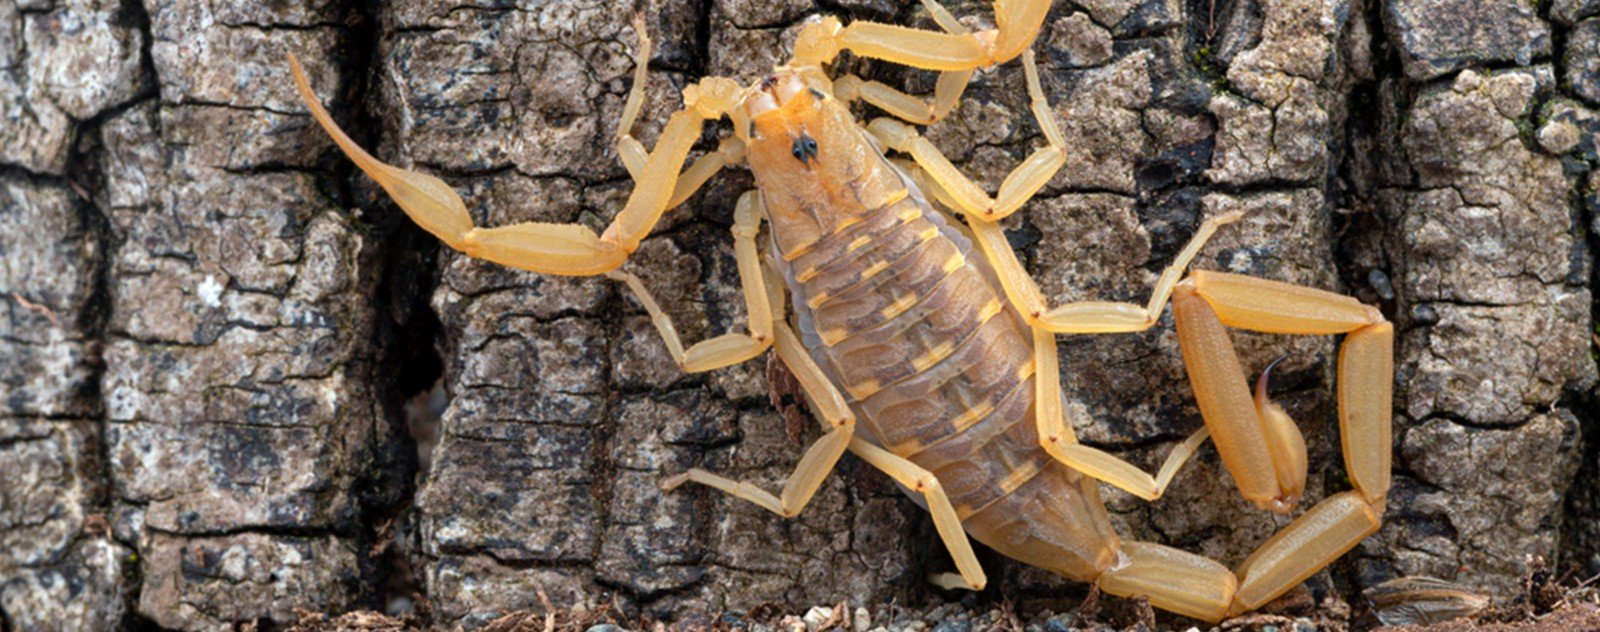 phasme scorpion